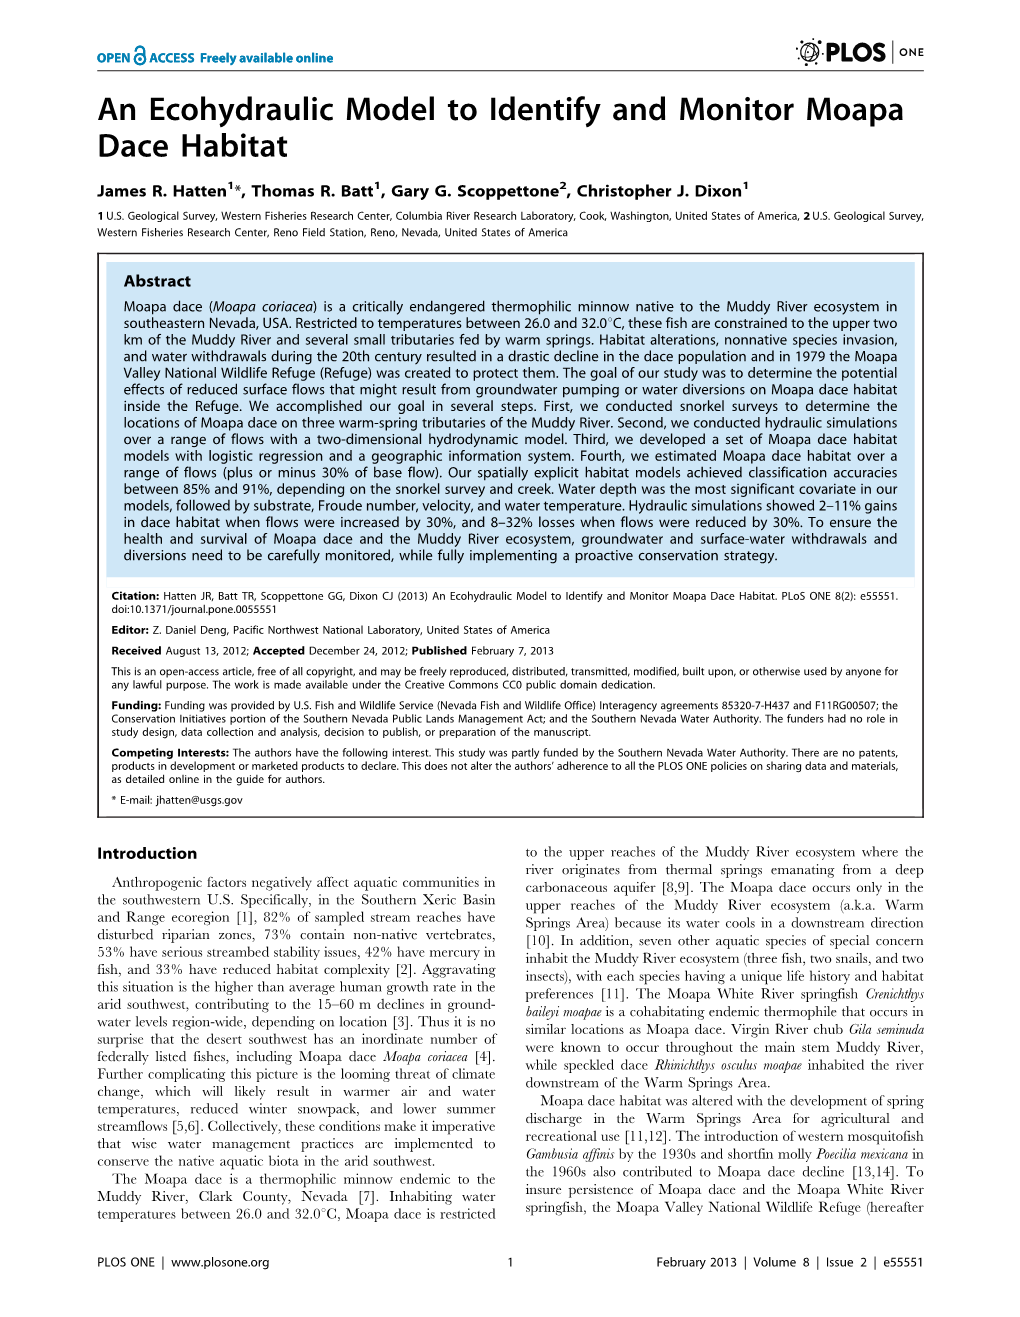 An Ecohydraulic Model to Identify and Monitor Moapa Dace Habitat